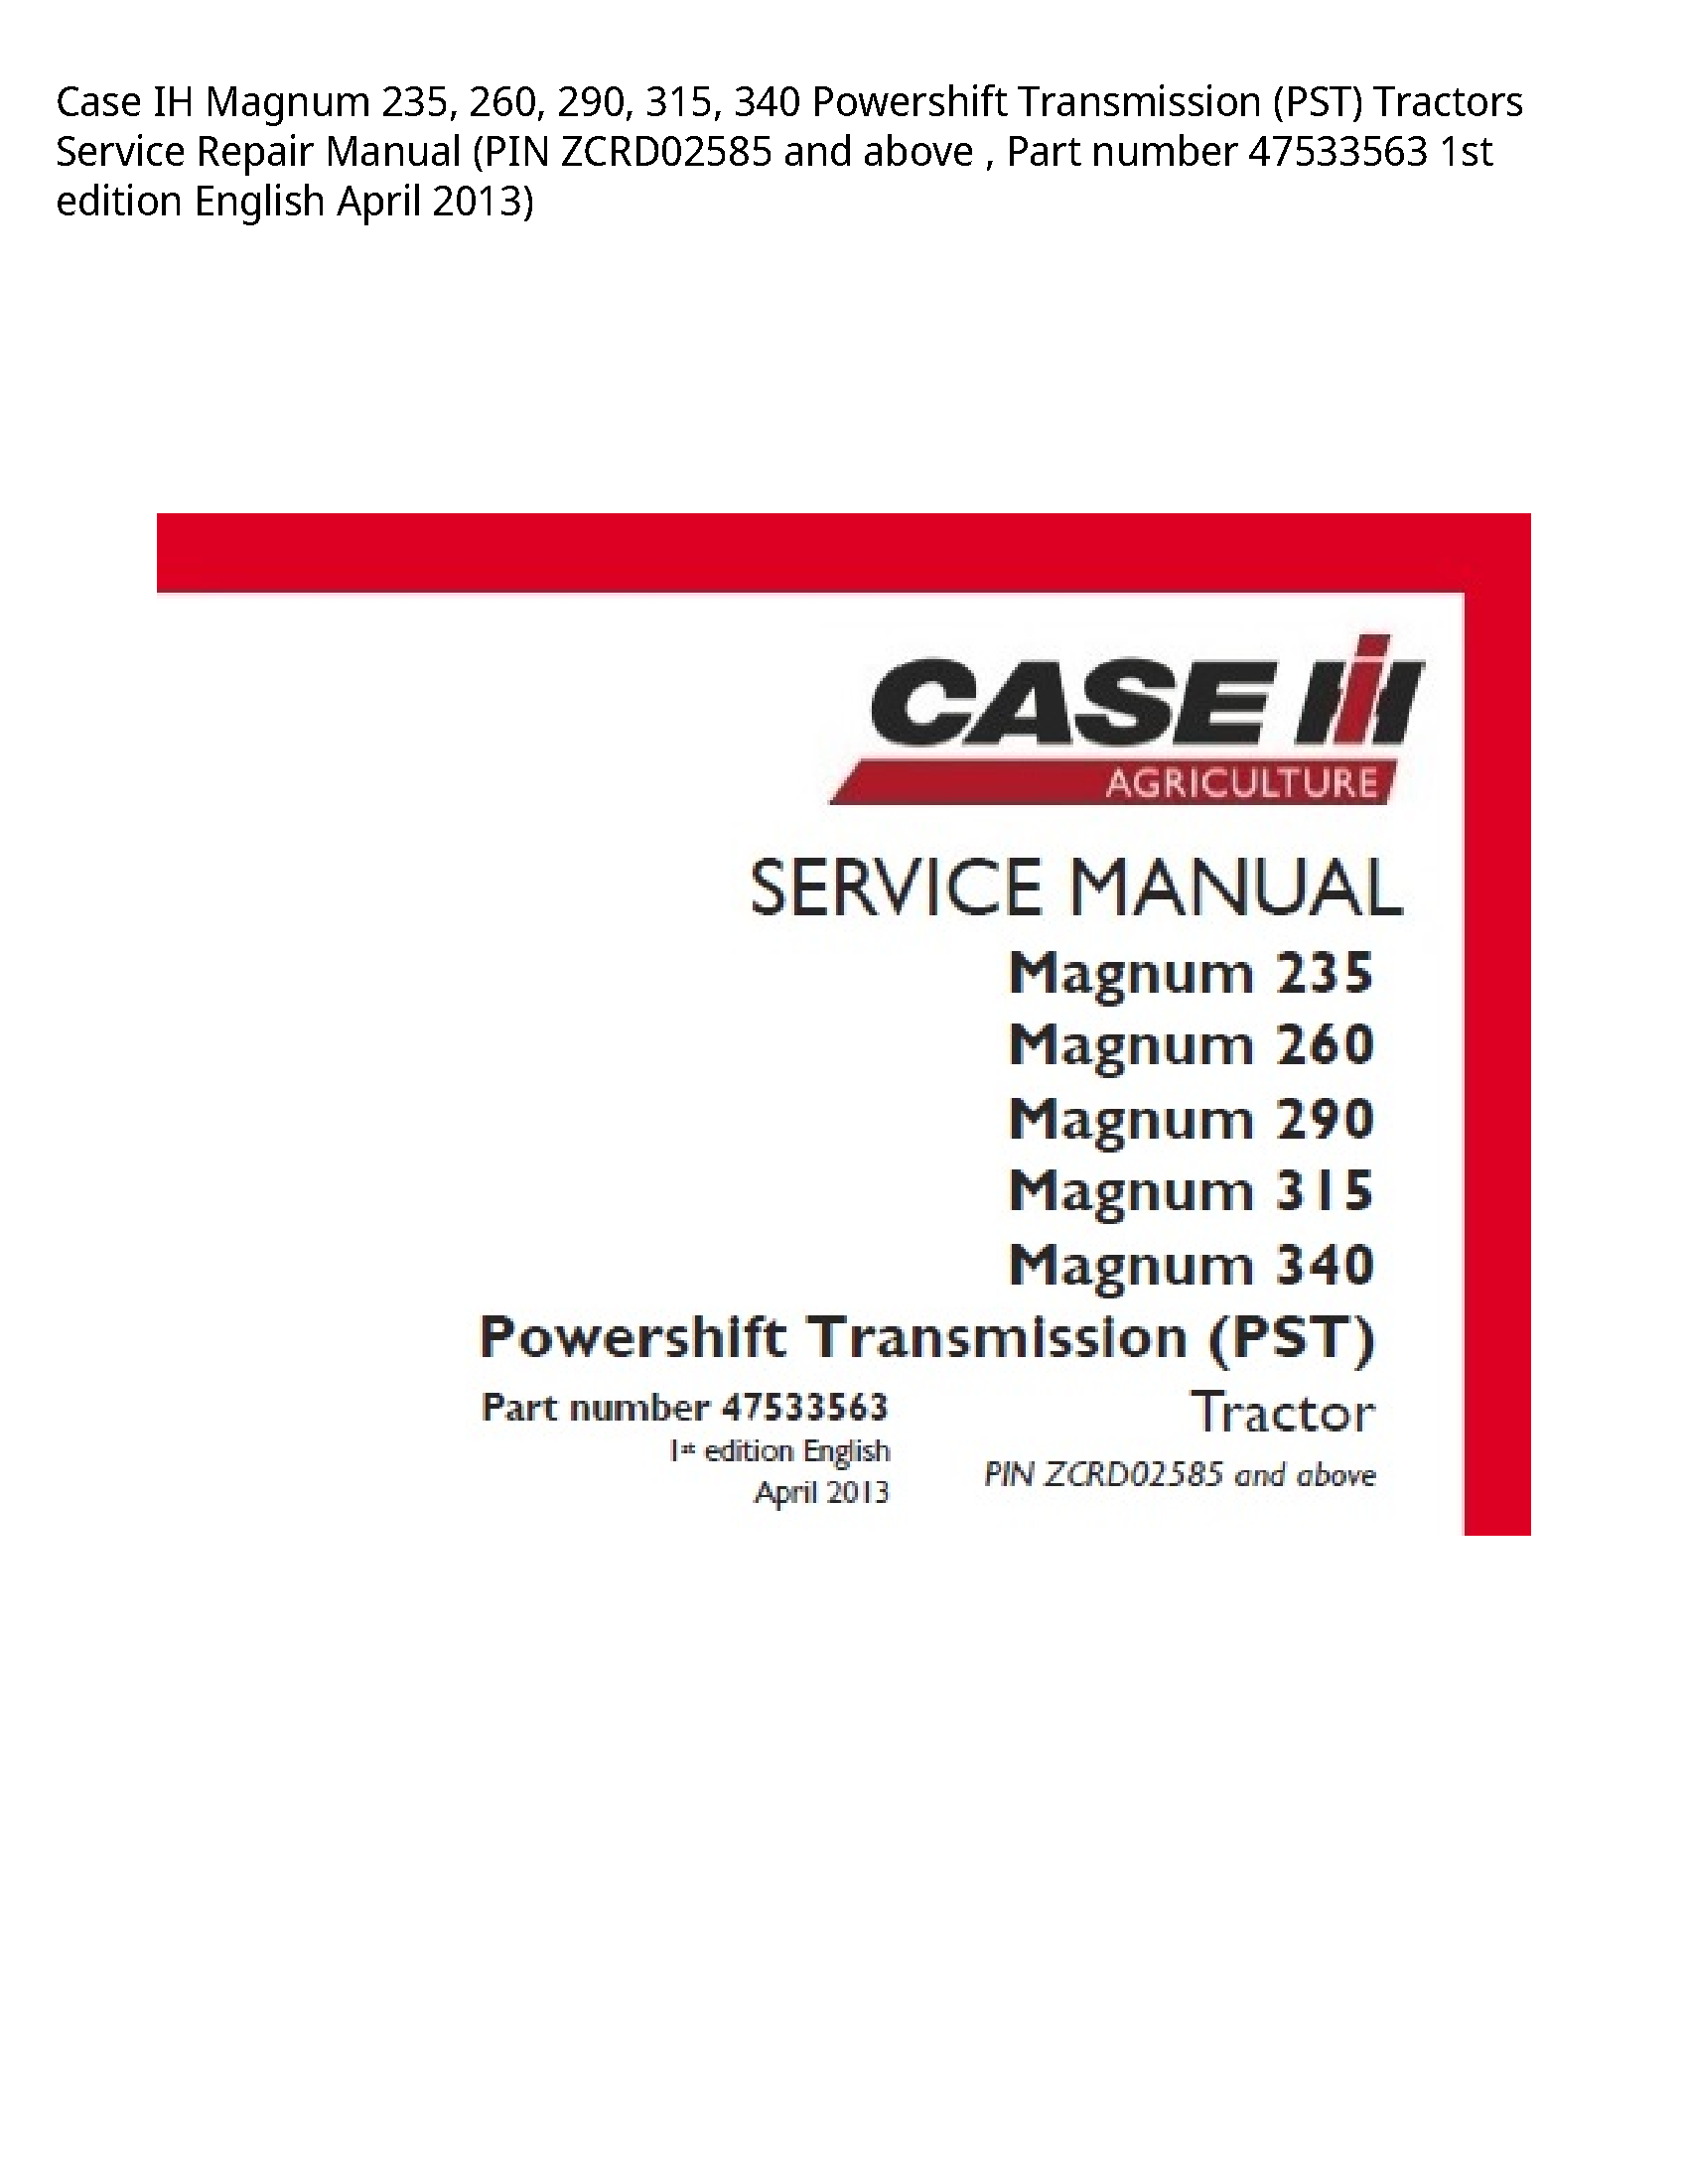 Case/Case IH 235 IH Magnum Powershift Transmission (PST) Tractors manual